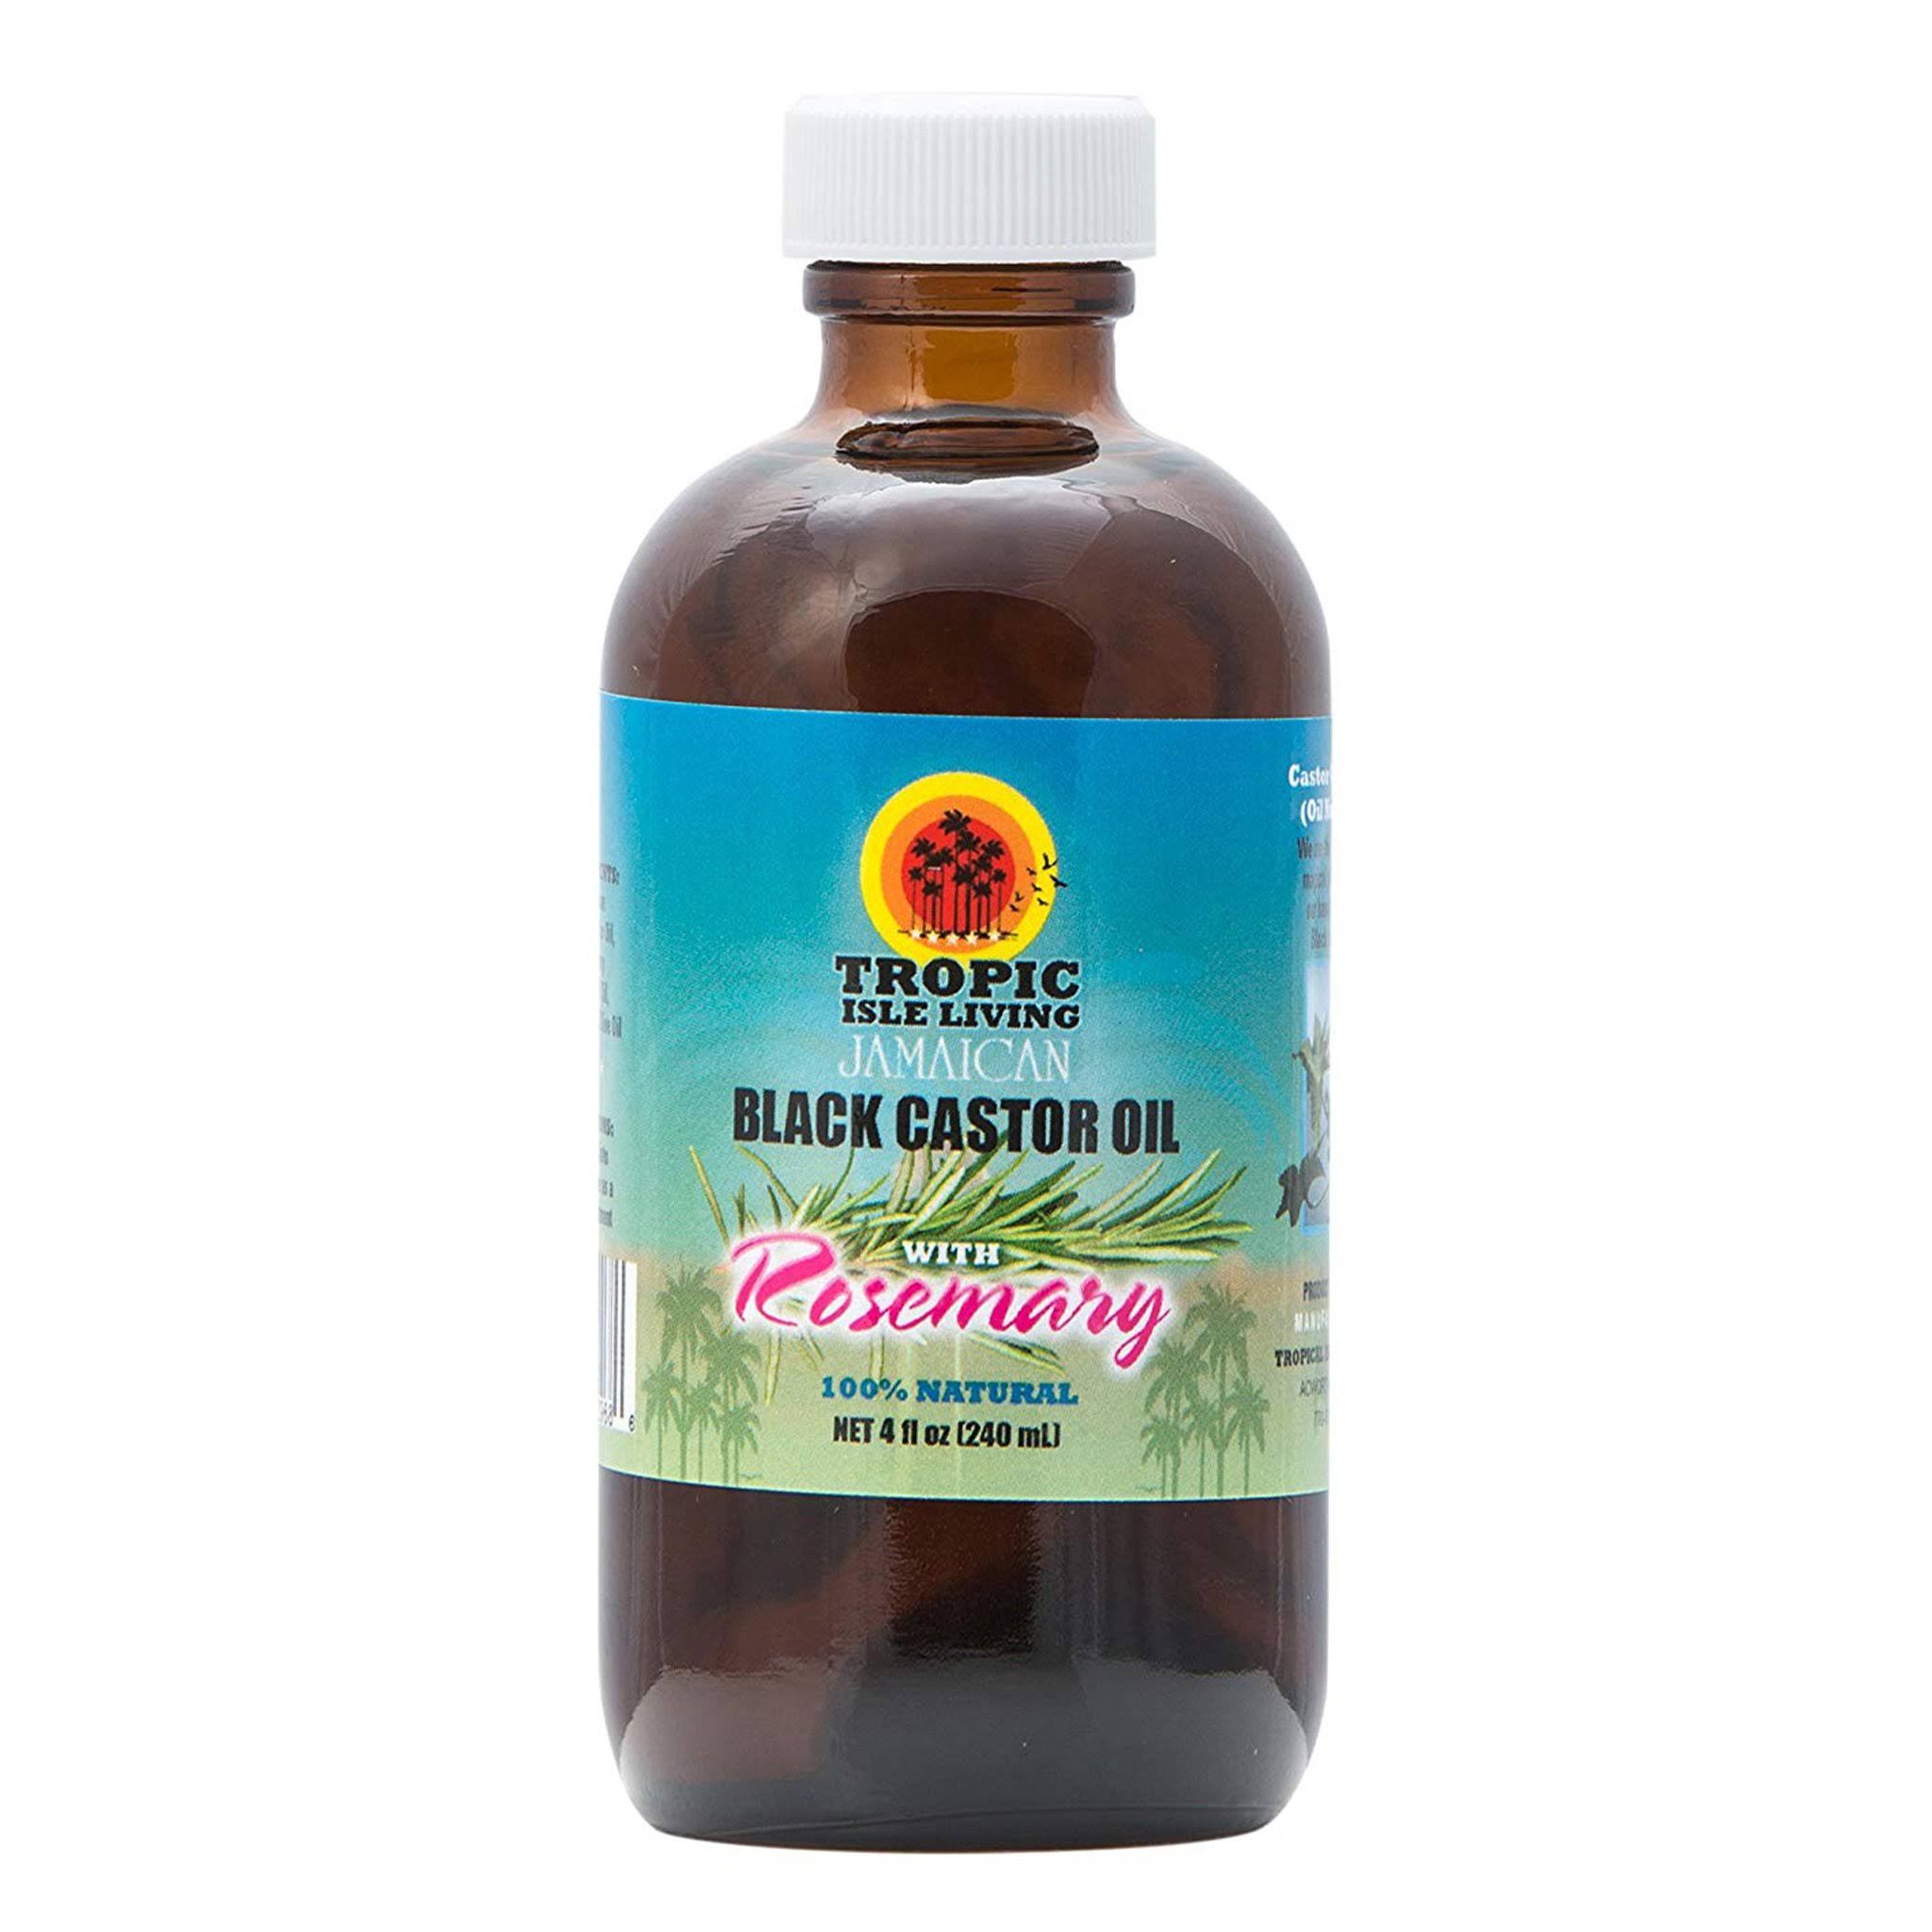 Tropic Isle Living Jamaican Black Castor Oil - Rosemary - 4oz